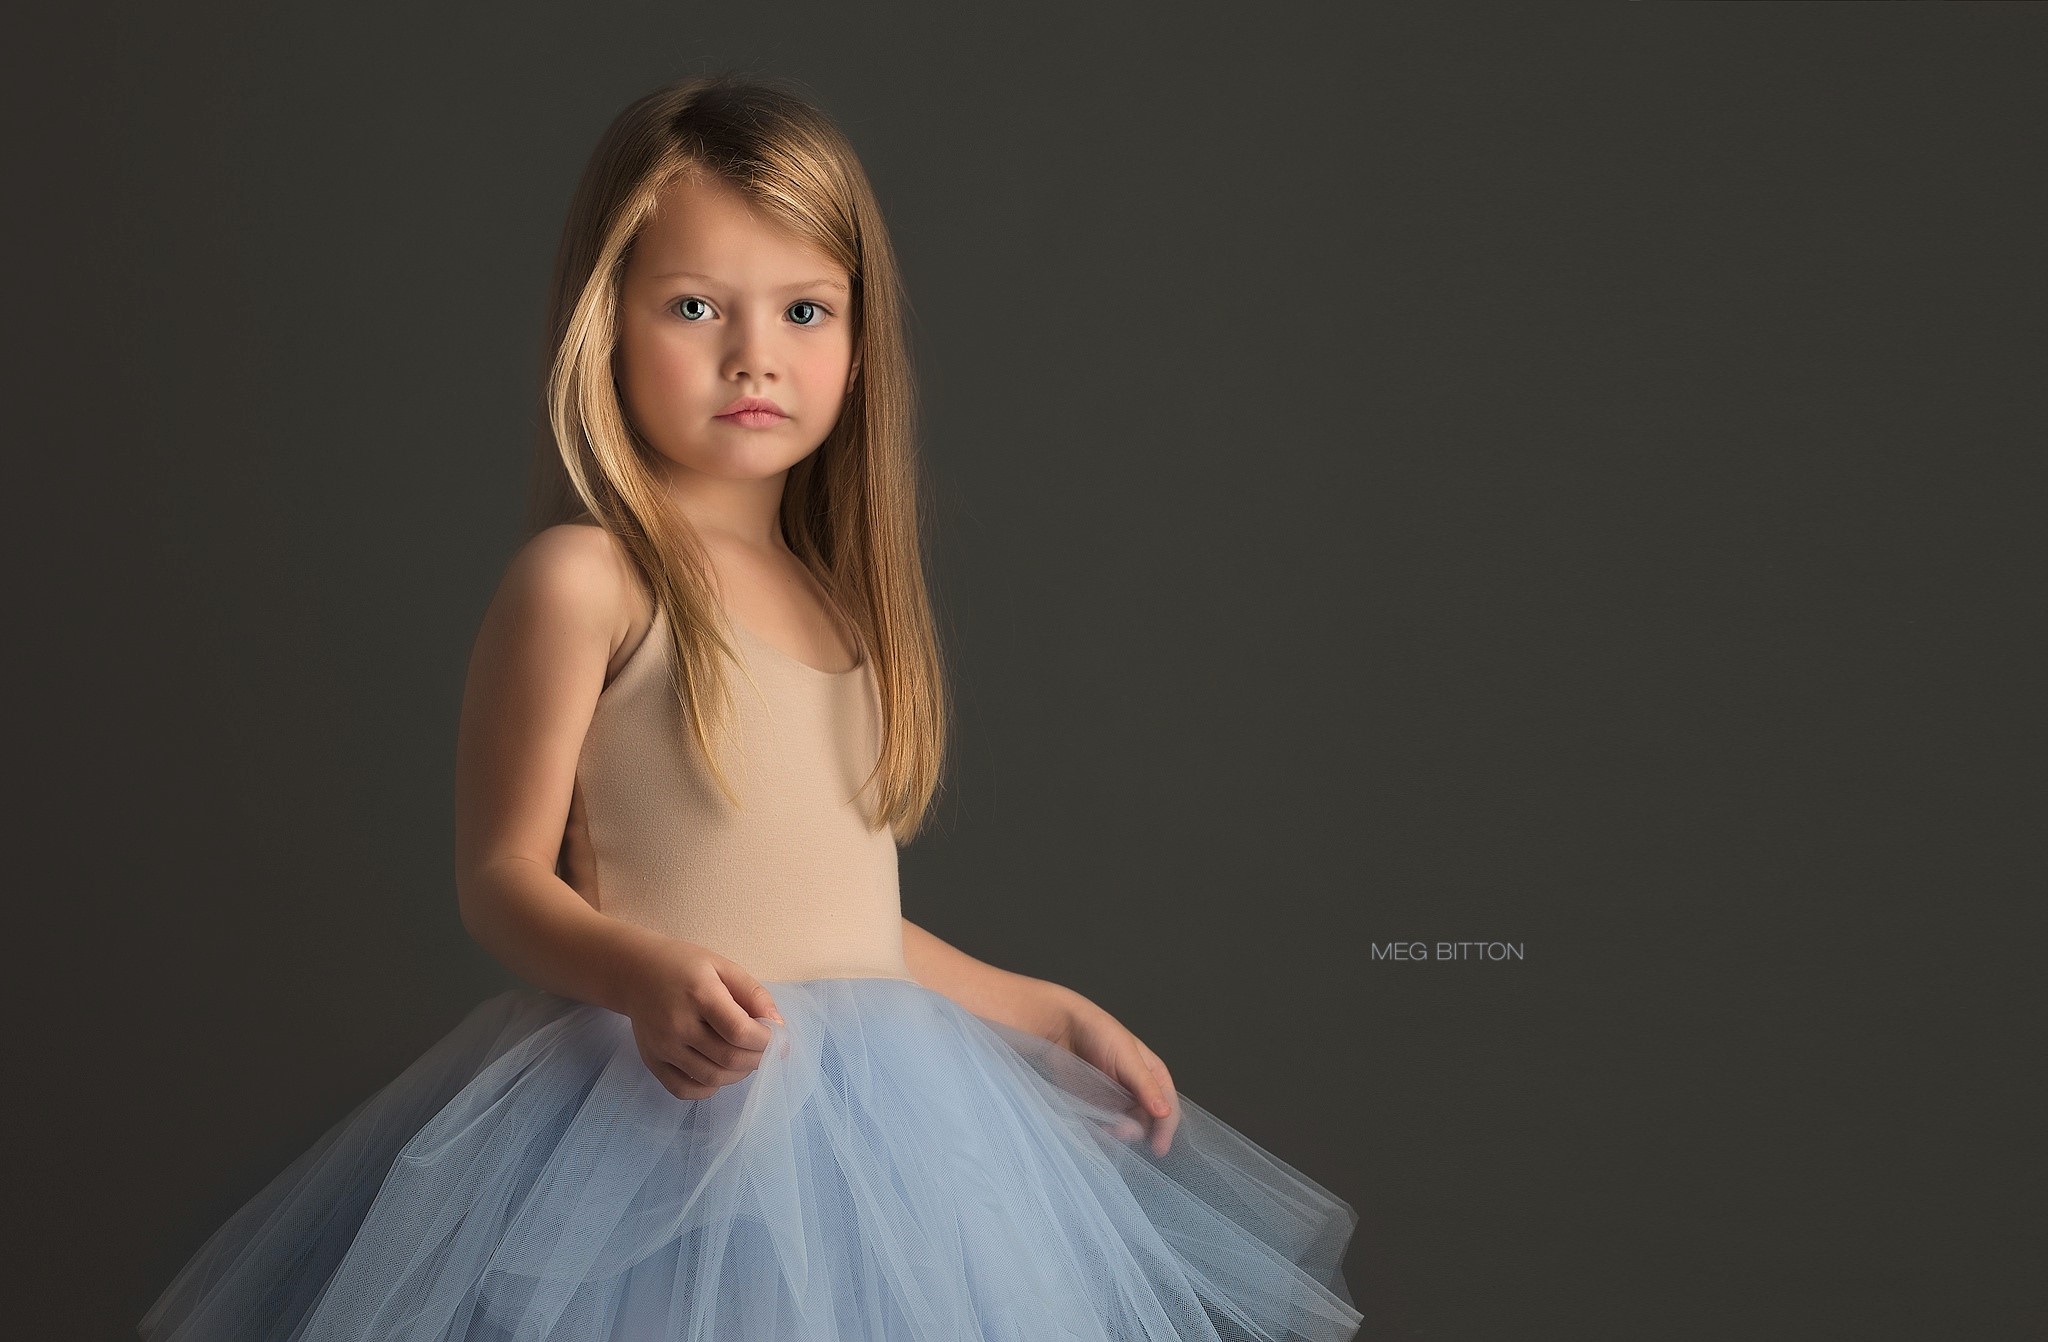 Little Girl Wearing Tutu by Meg Bitton